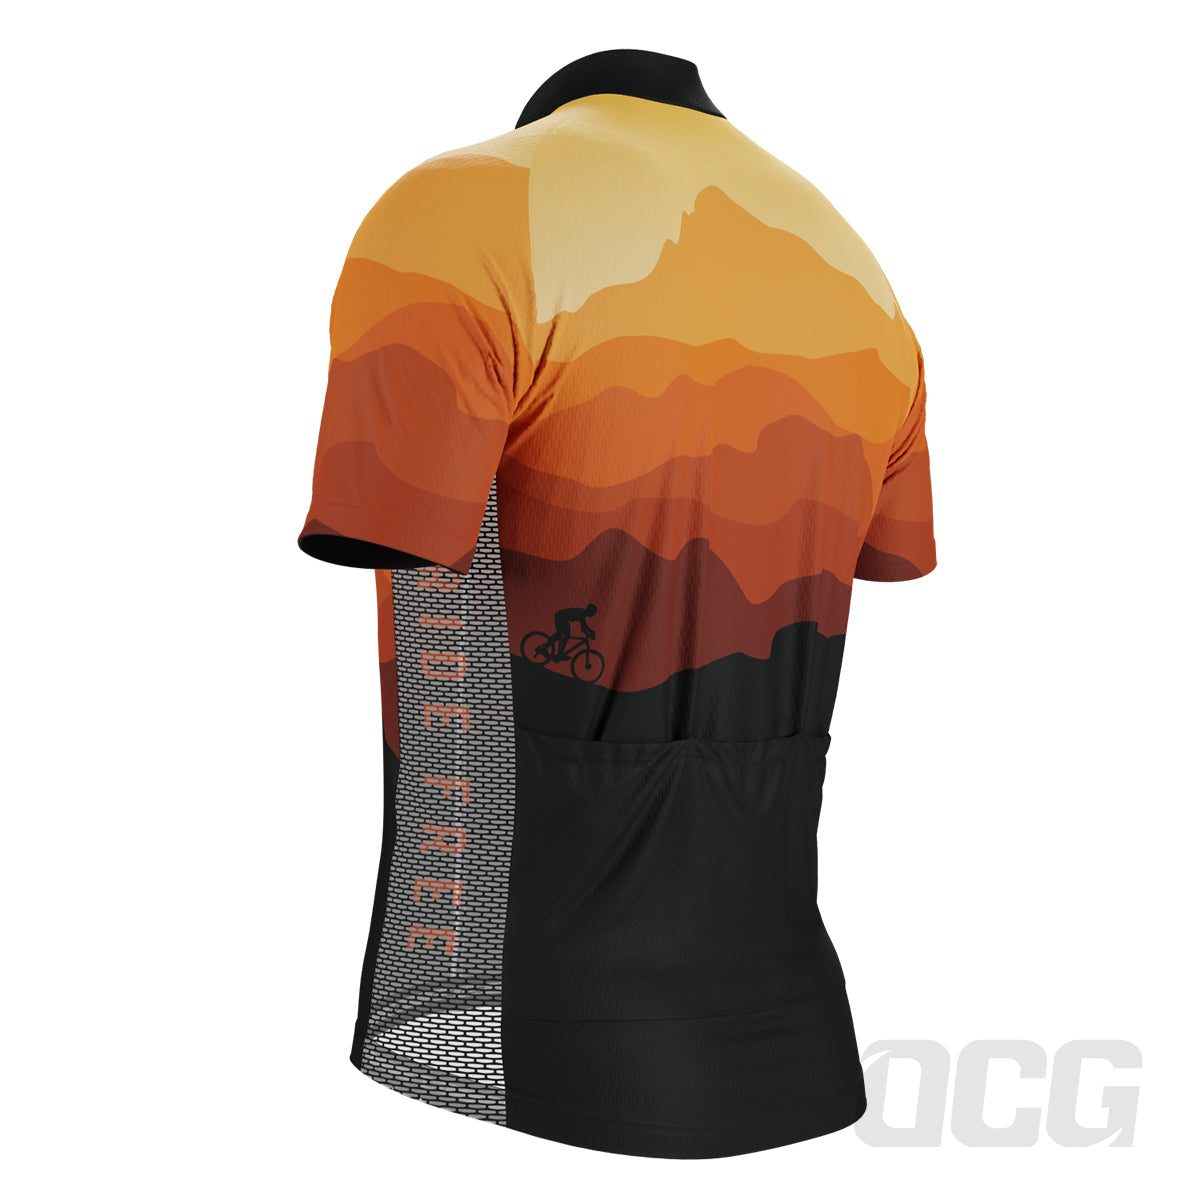 Men's Ride Free Sunset Short Sleeve Cycling Jersey